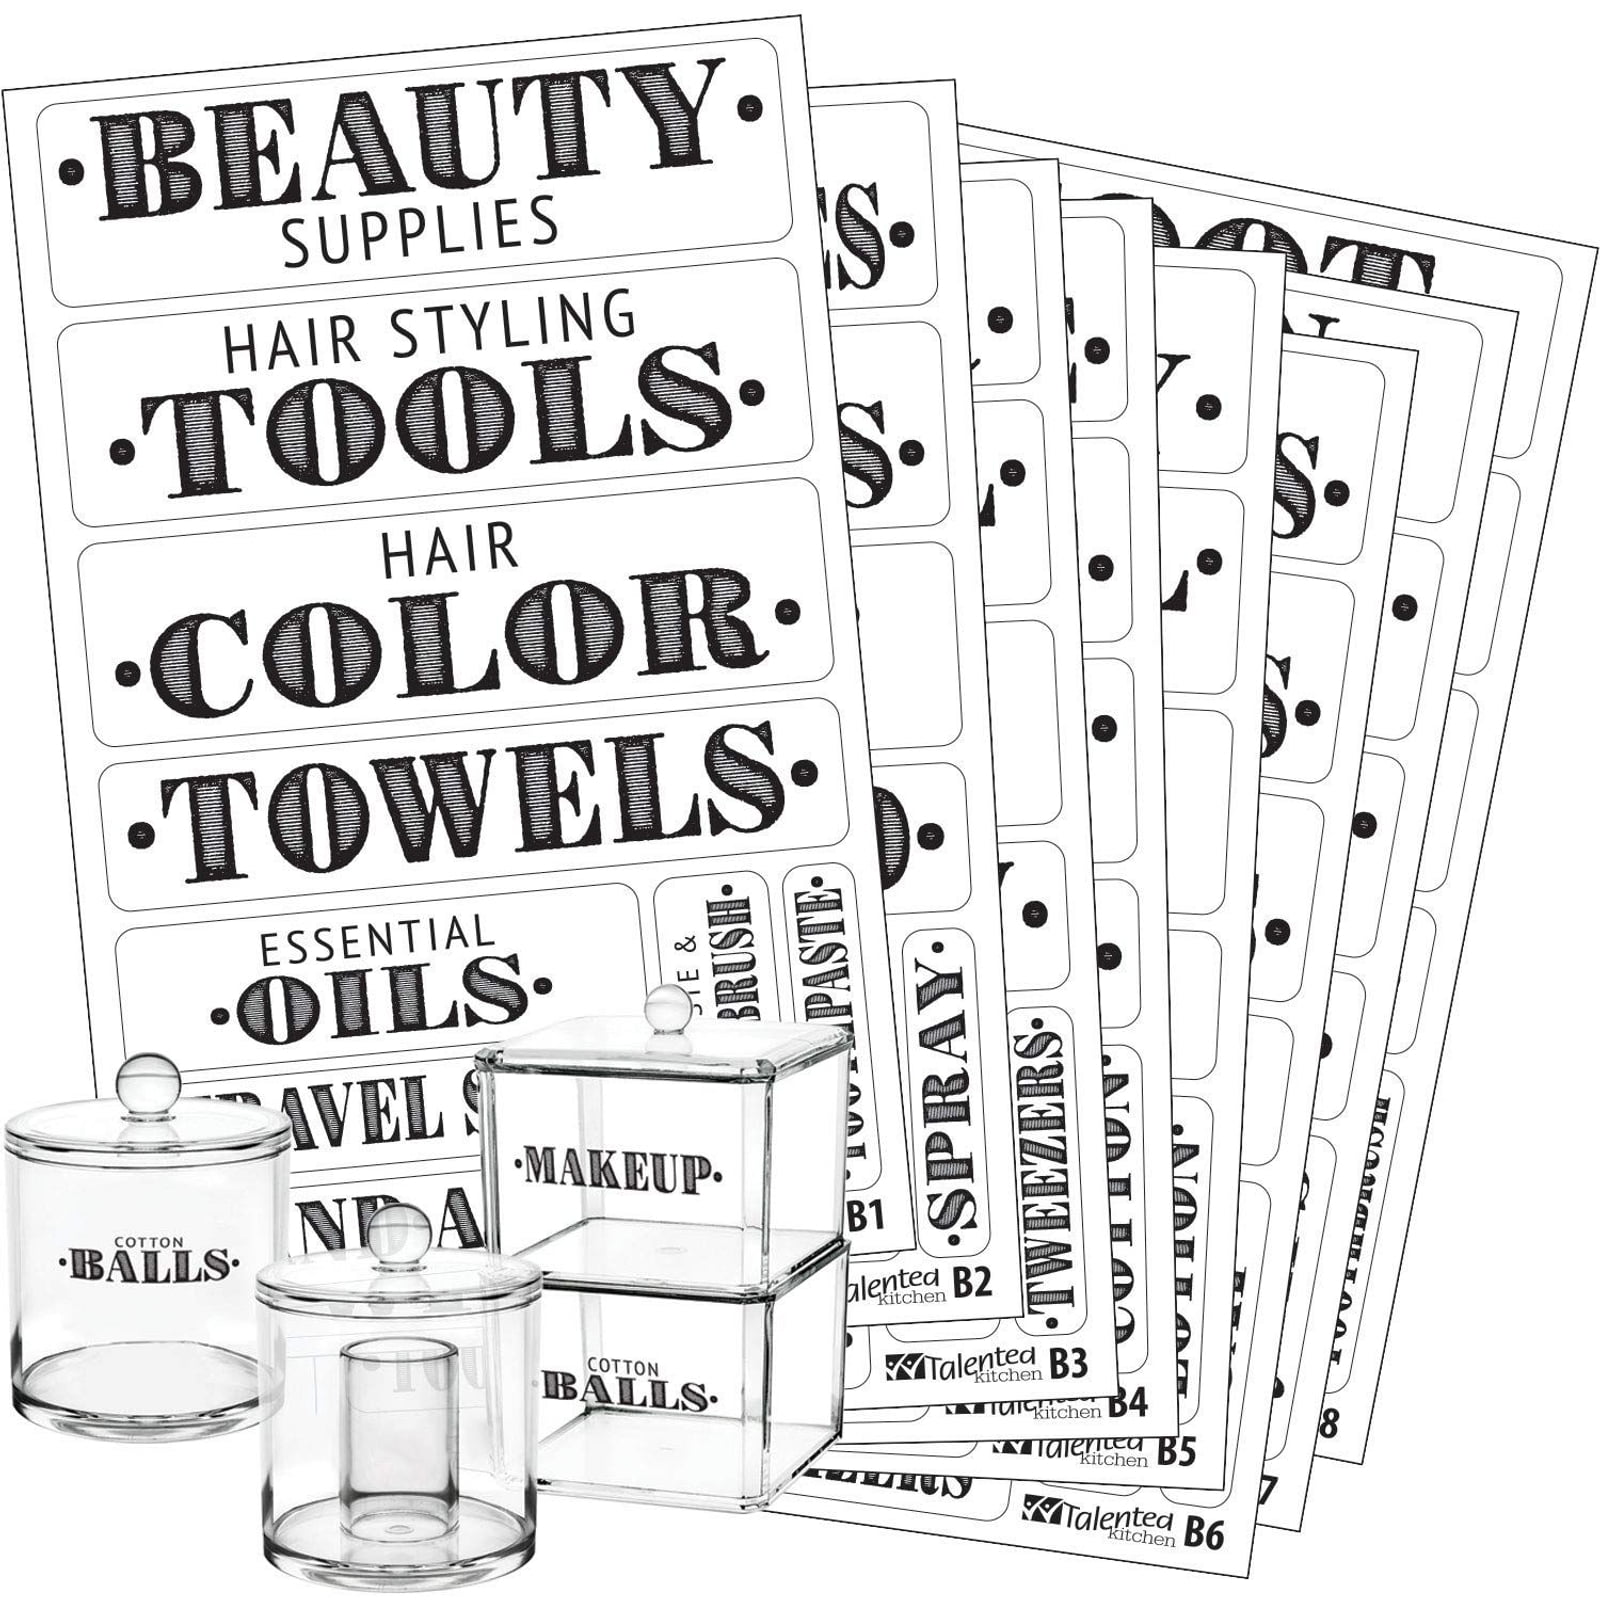 Bath,Beauty & Makeup Preprinted Stickers 276 PCS Bathroom Organization Labels,Waterproof Tear-Resistant No Residue 